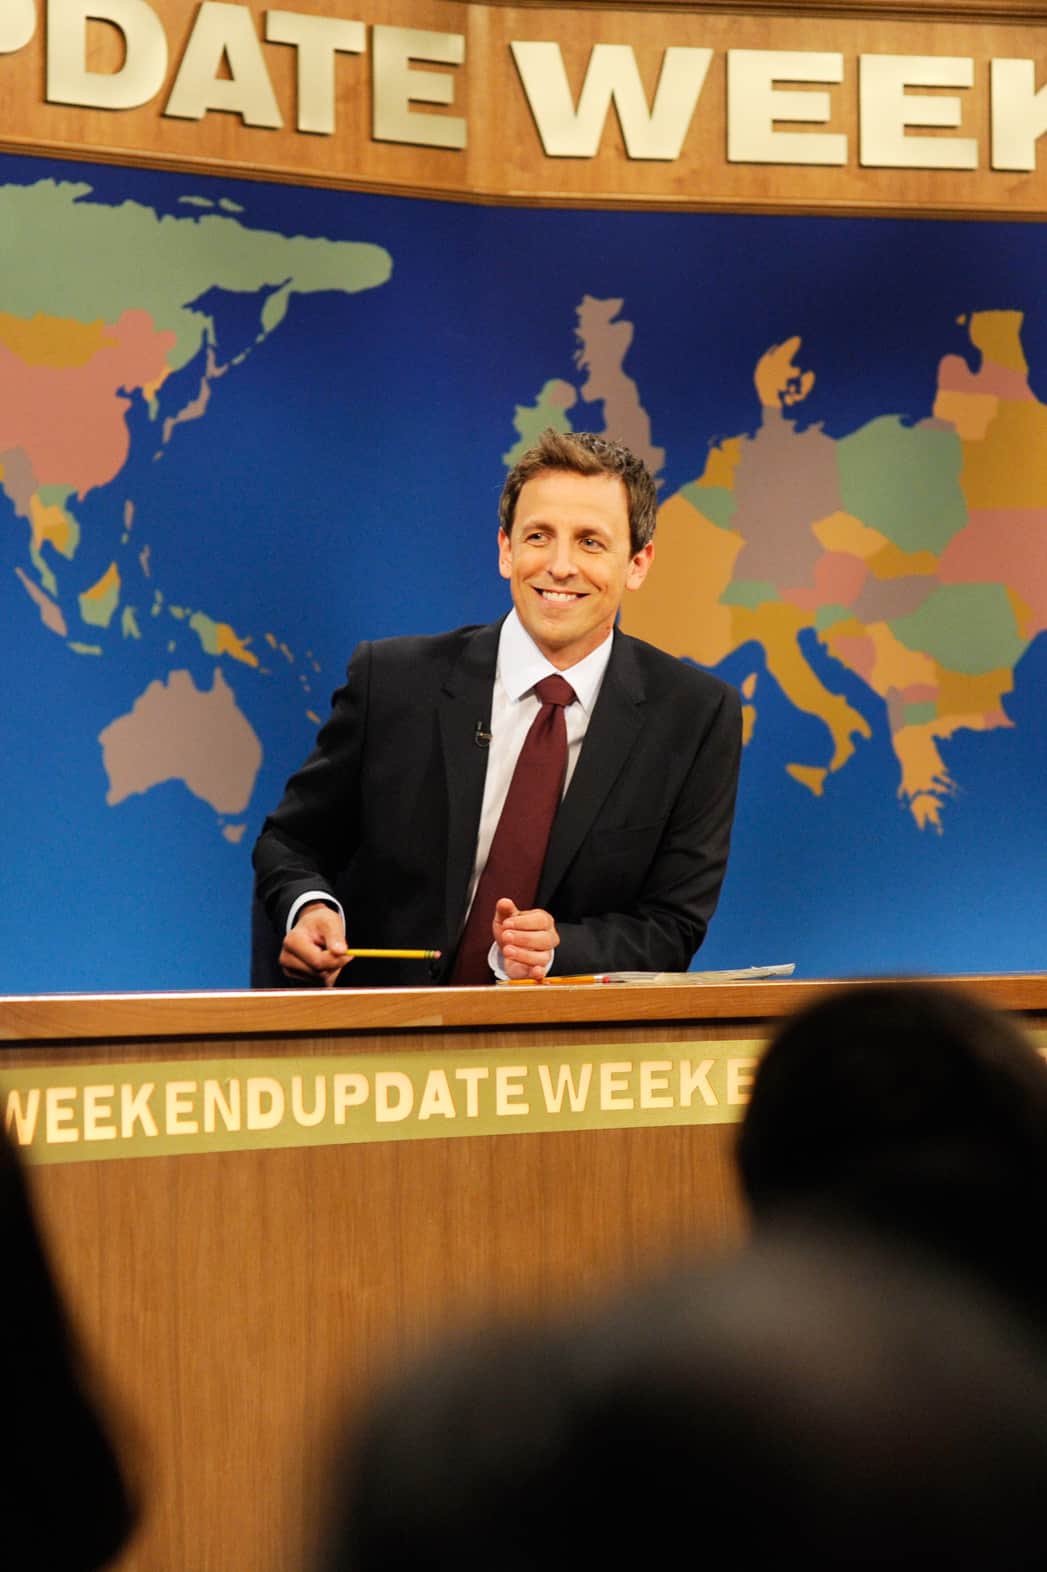 Seth Meyers doing Saturday Night Live Weekend Update